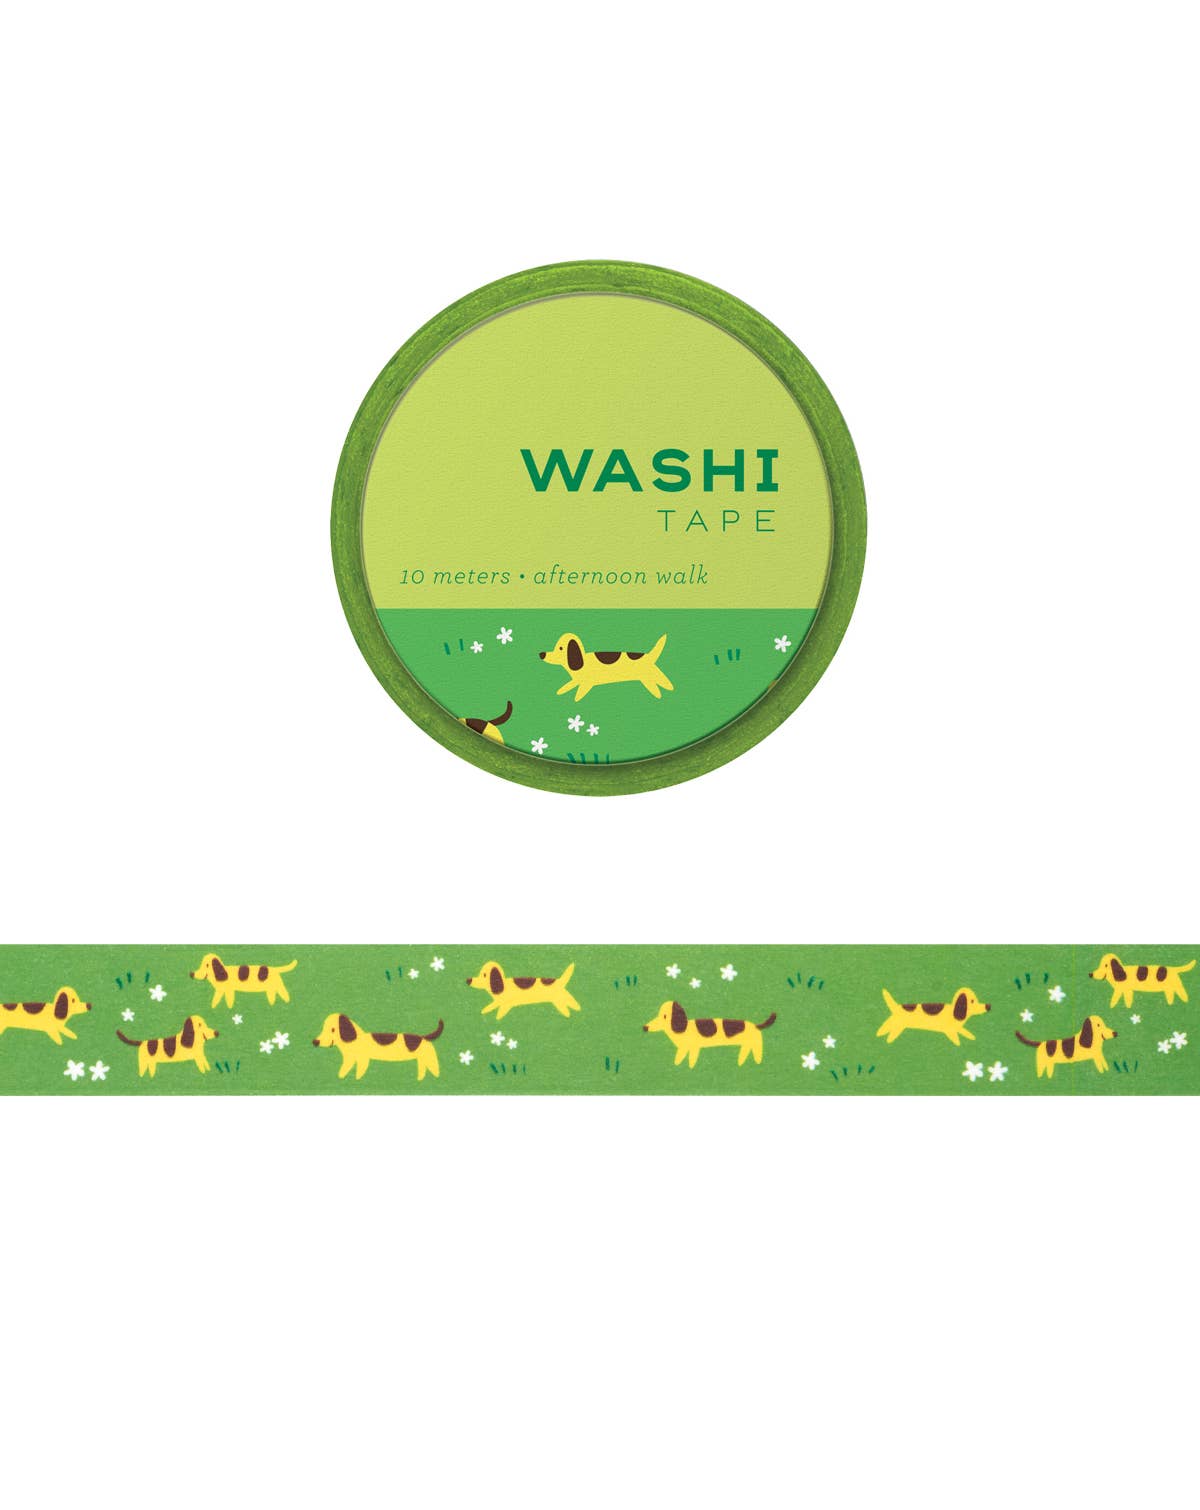 Washi Tape: Afternoon walk